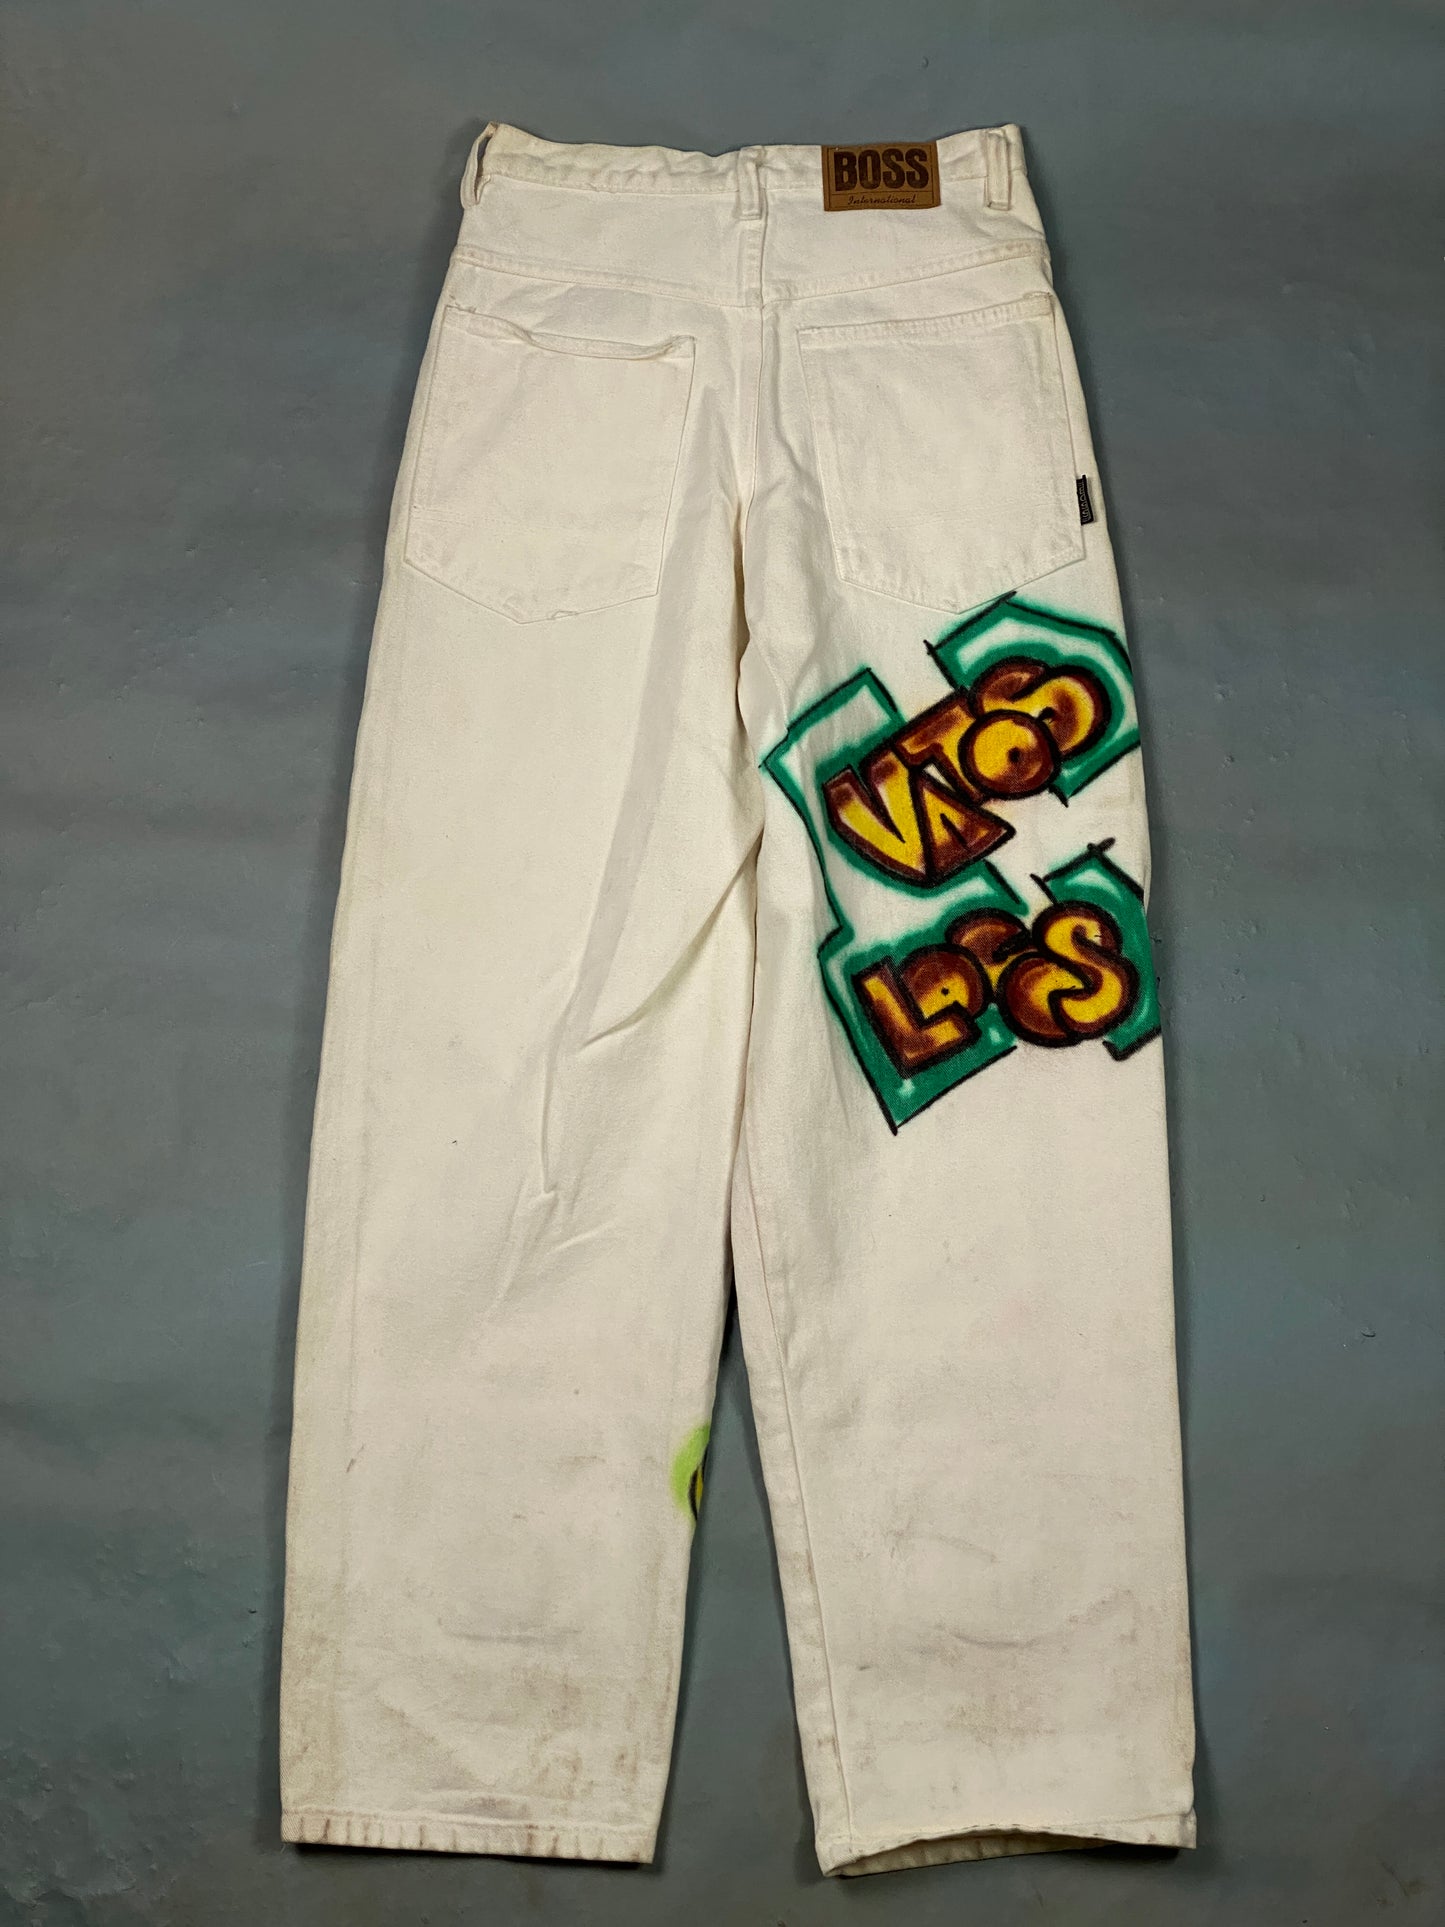 Boss Int. Vintage Vatos Locos Jeans - 32